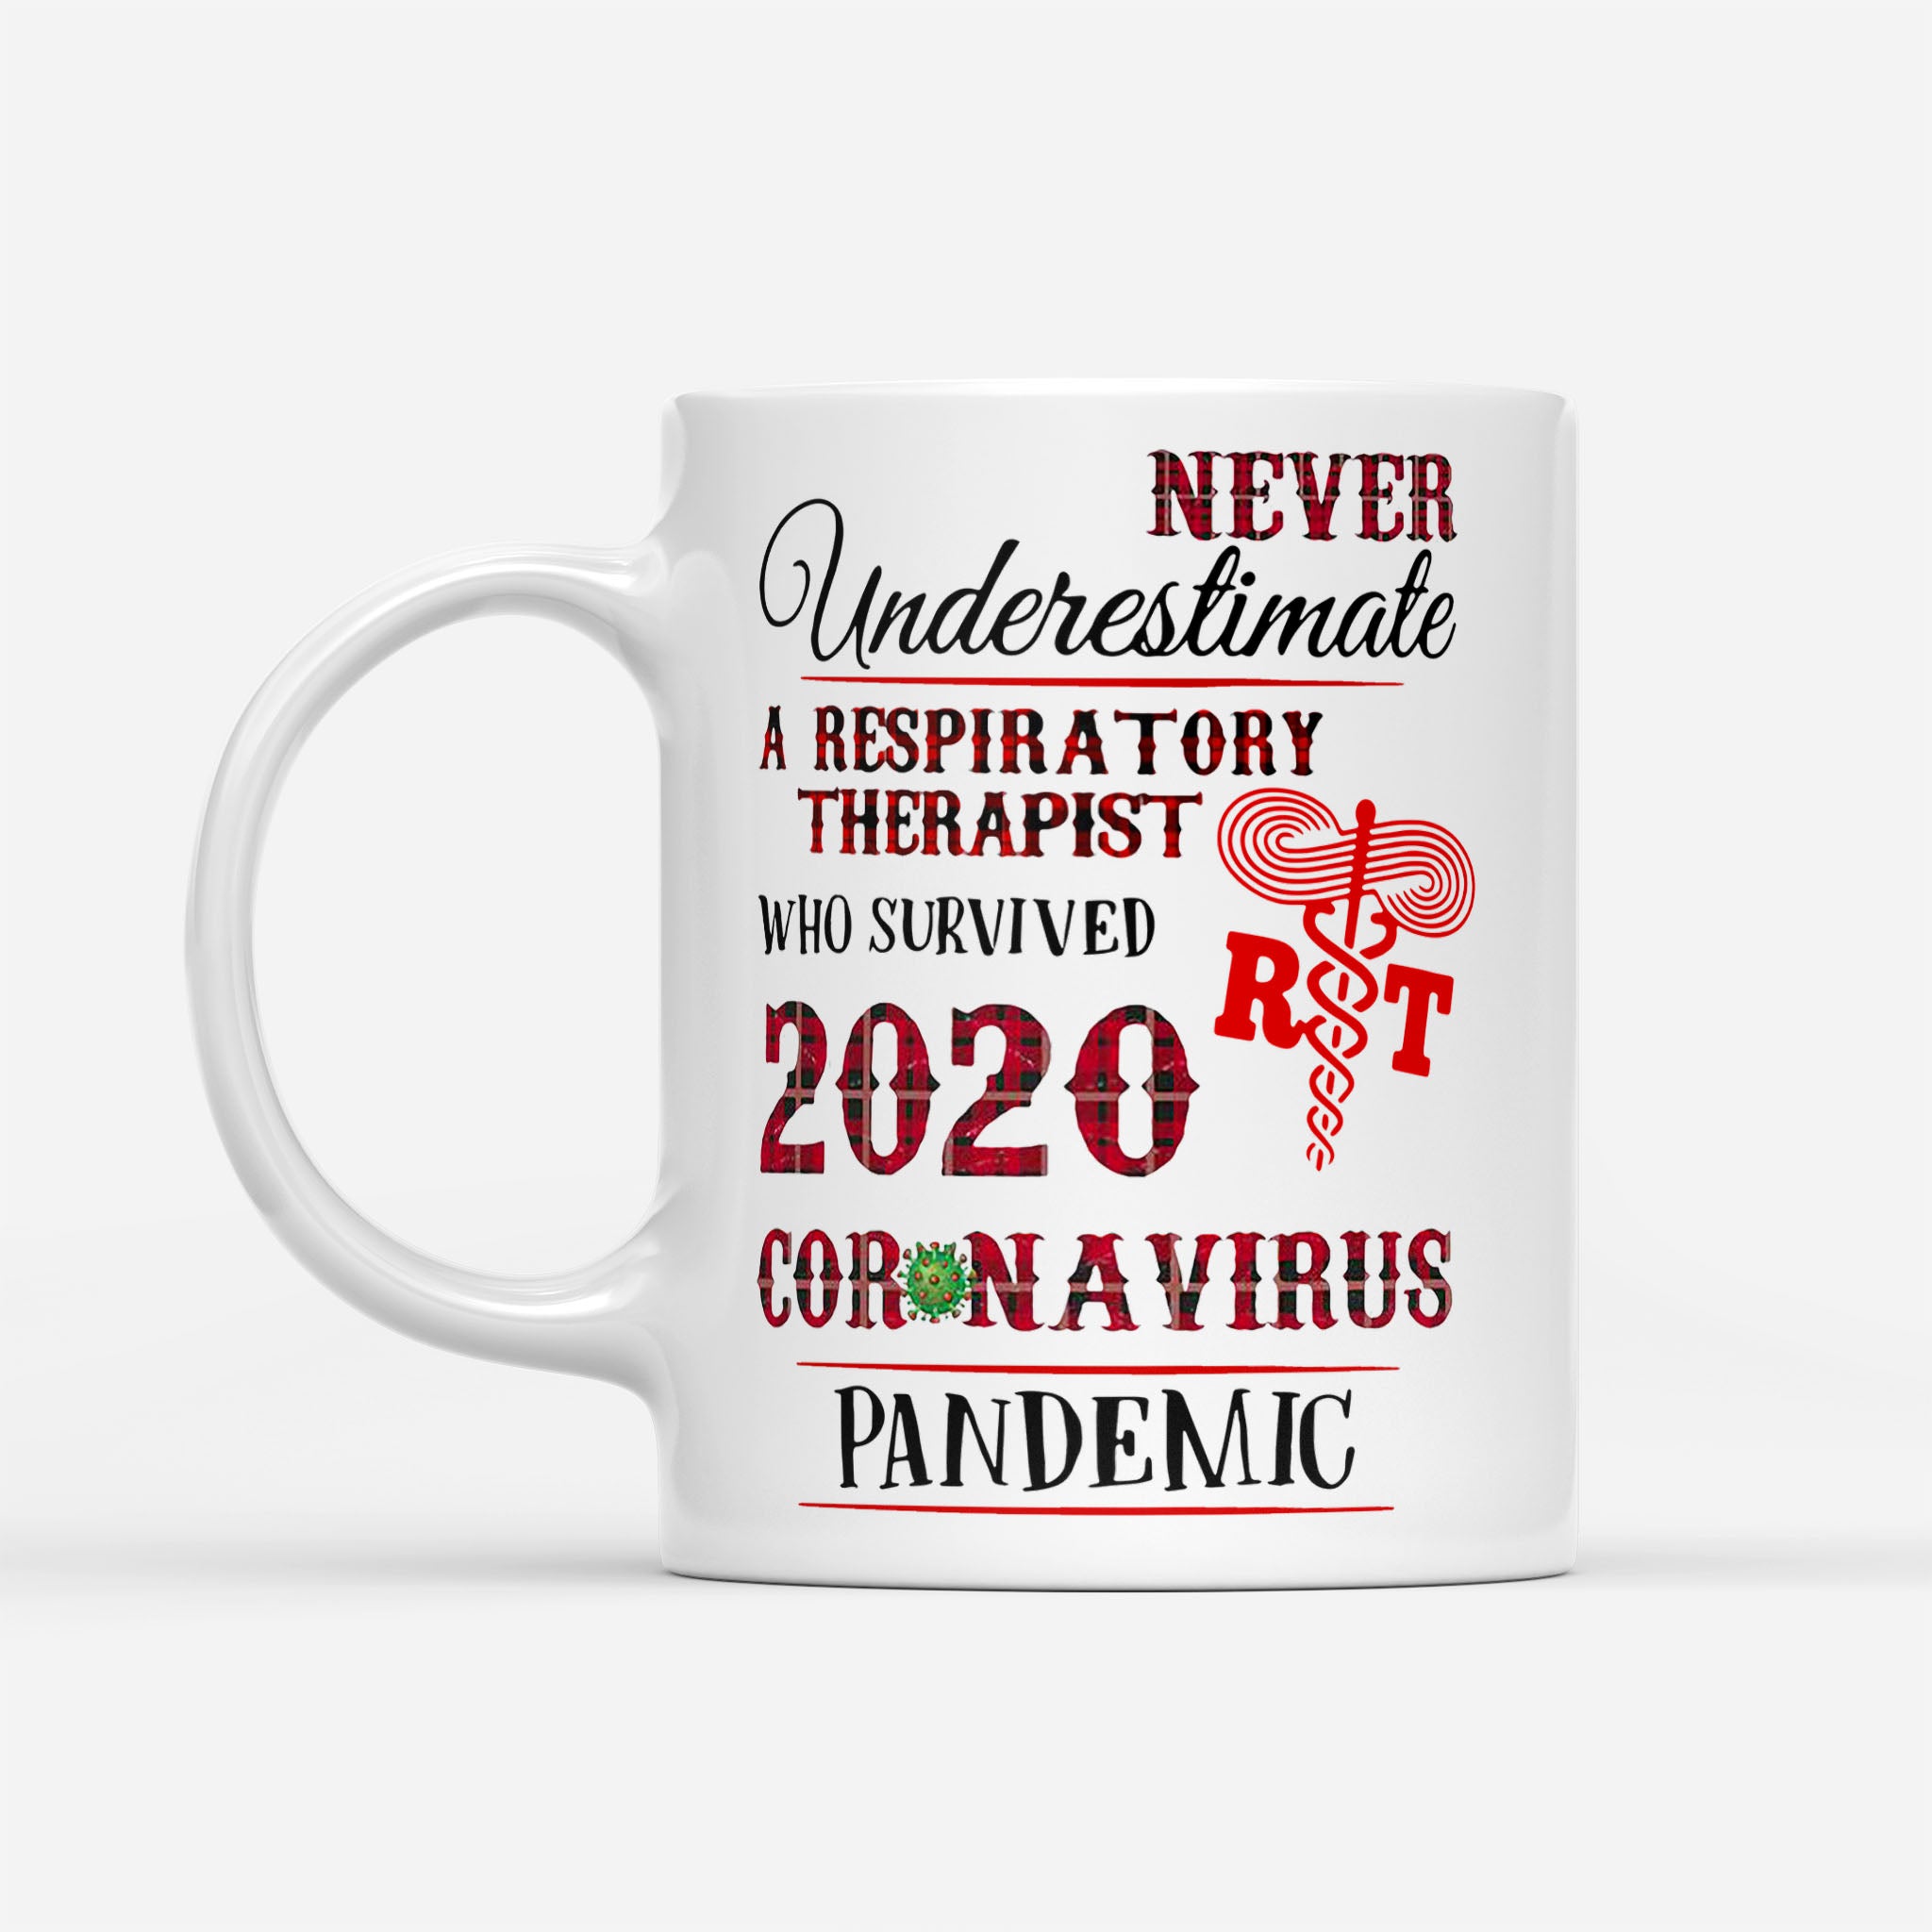 Never Underestimate A Respiratory Therapist Who Survived 2020 Coronavirus Pandemic - White Mug